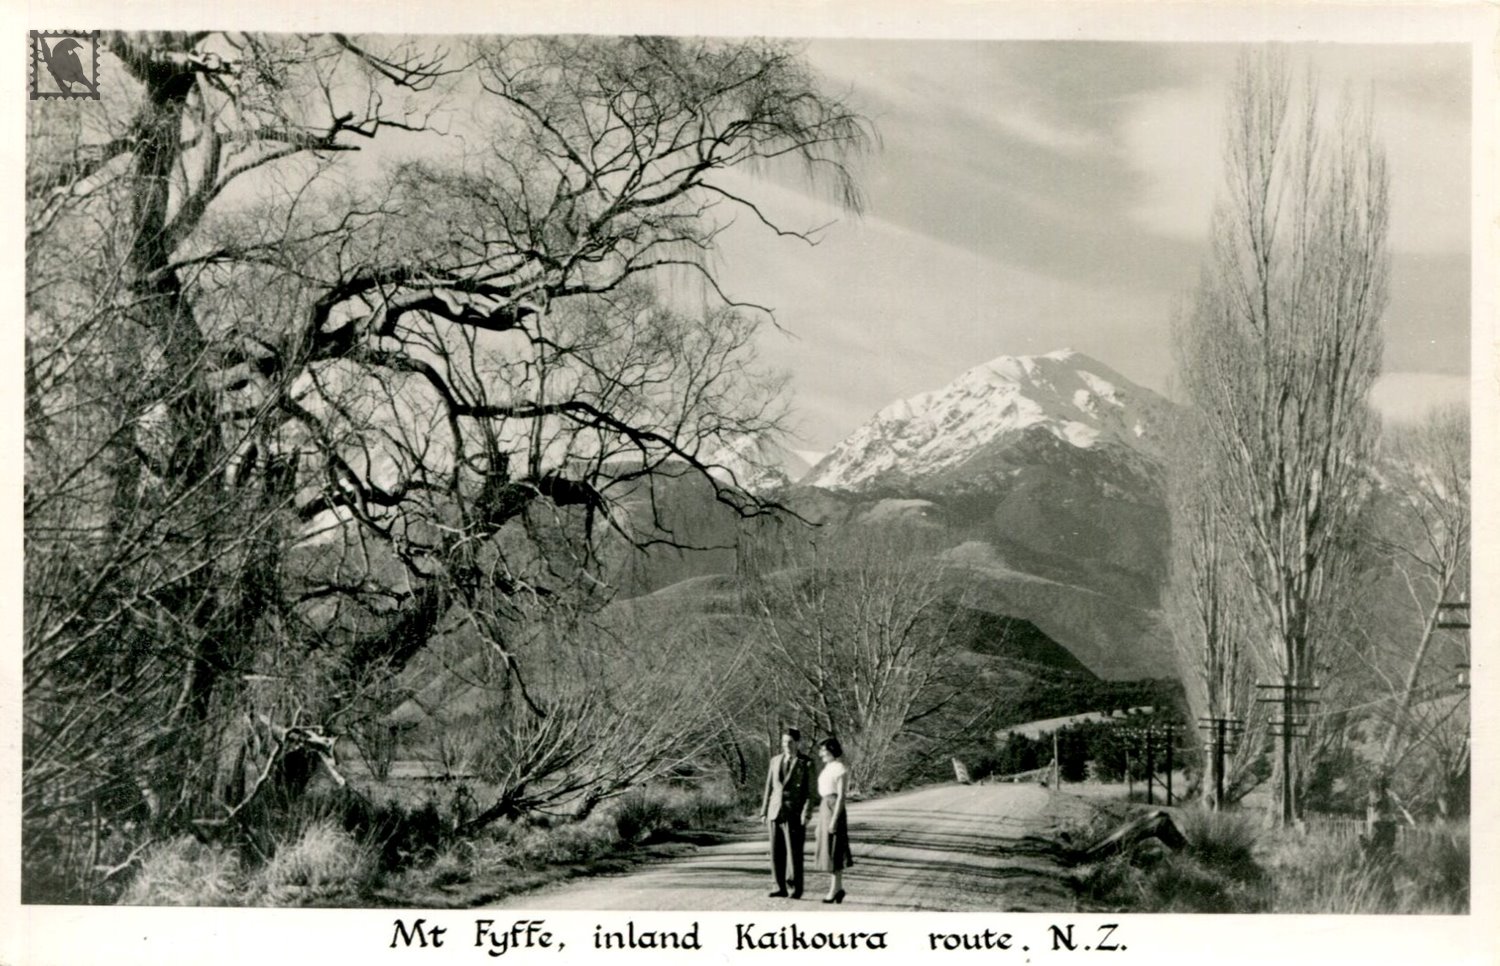 Mount Fyffe on the Inland Kaikoura route